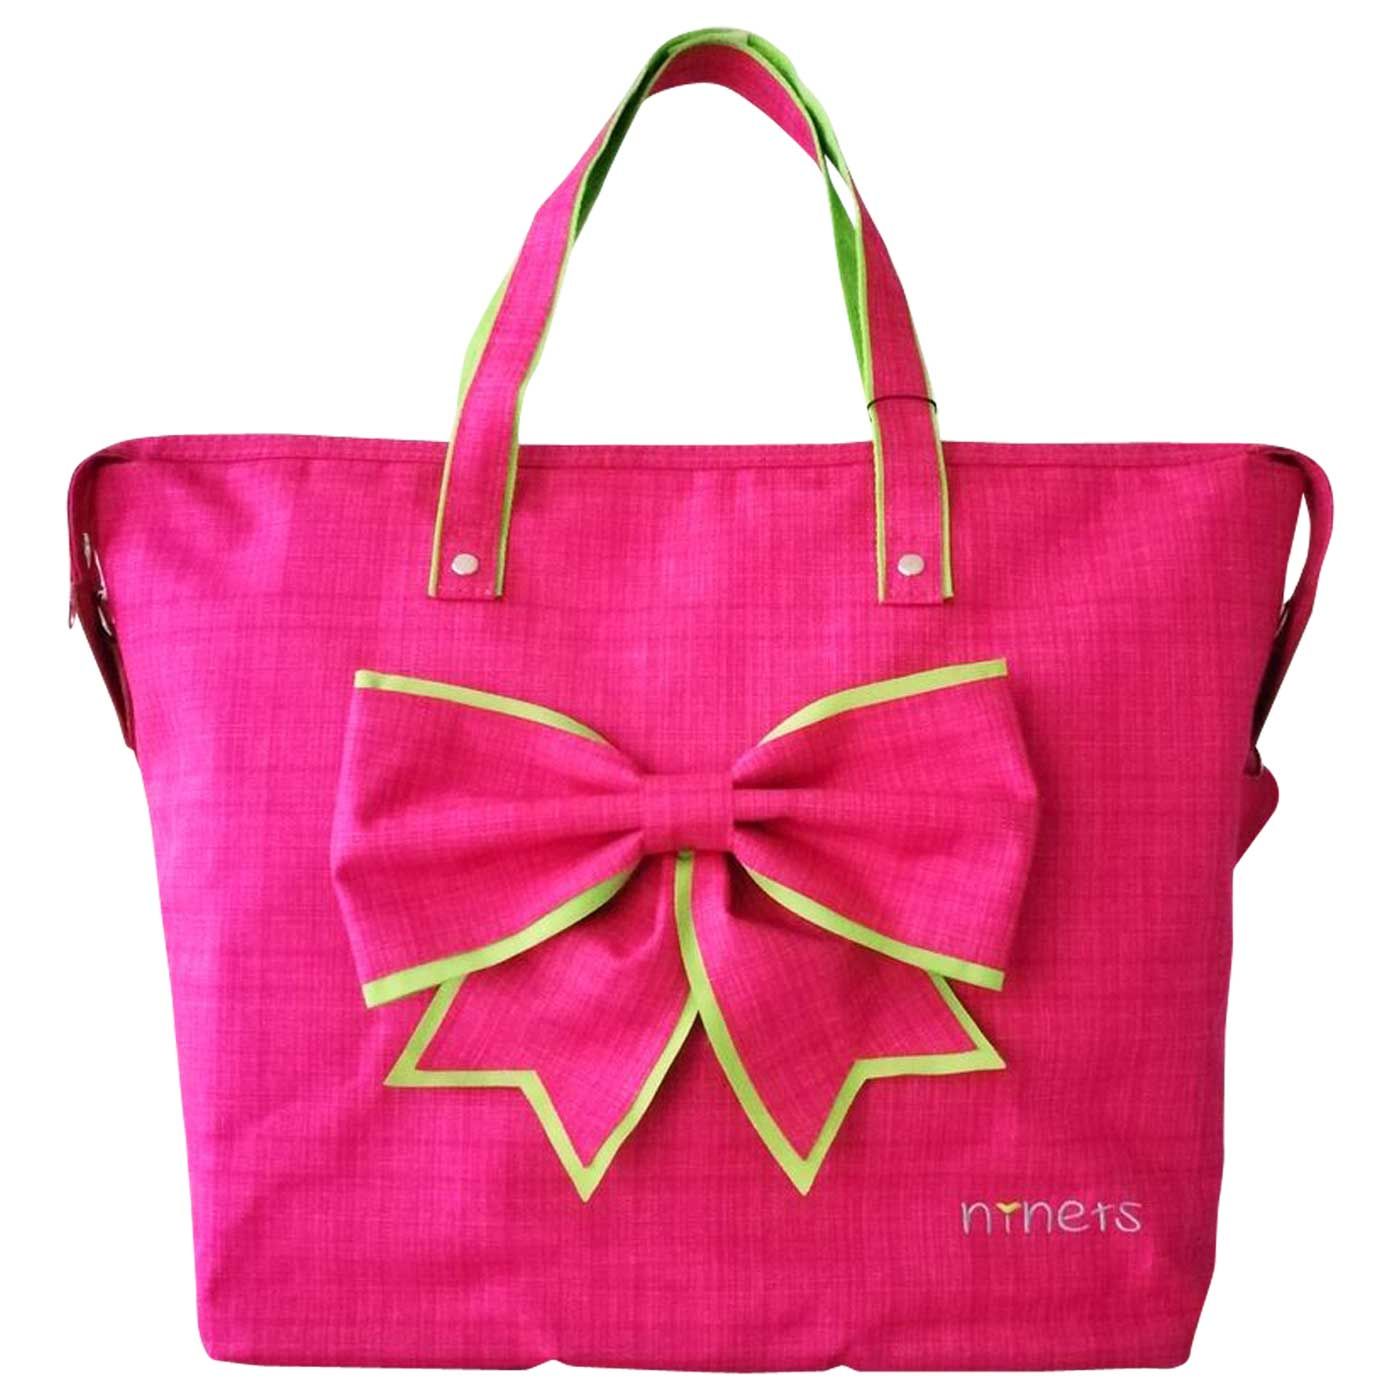 Ninets Ribbon Diaper Bag 5221-RDP-Pink Green - 1